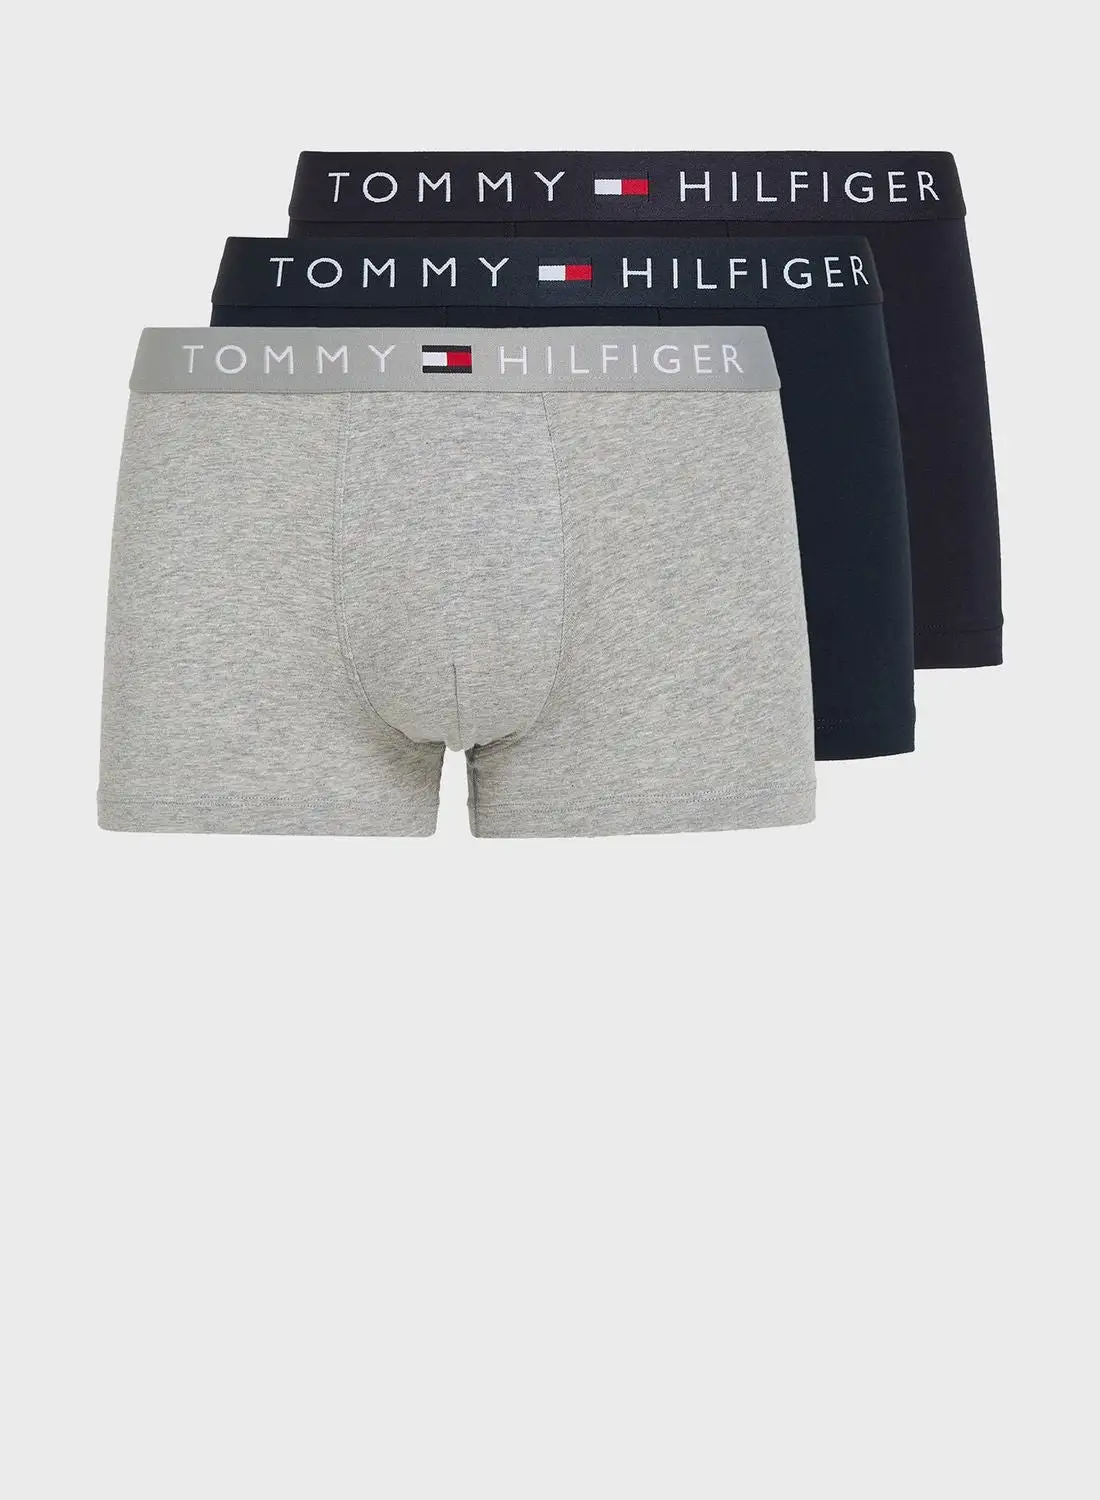 TOMMY HILFIGER 3 Pack Assorted Trunks